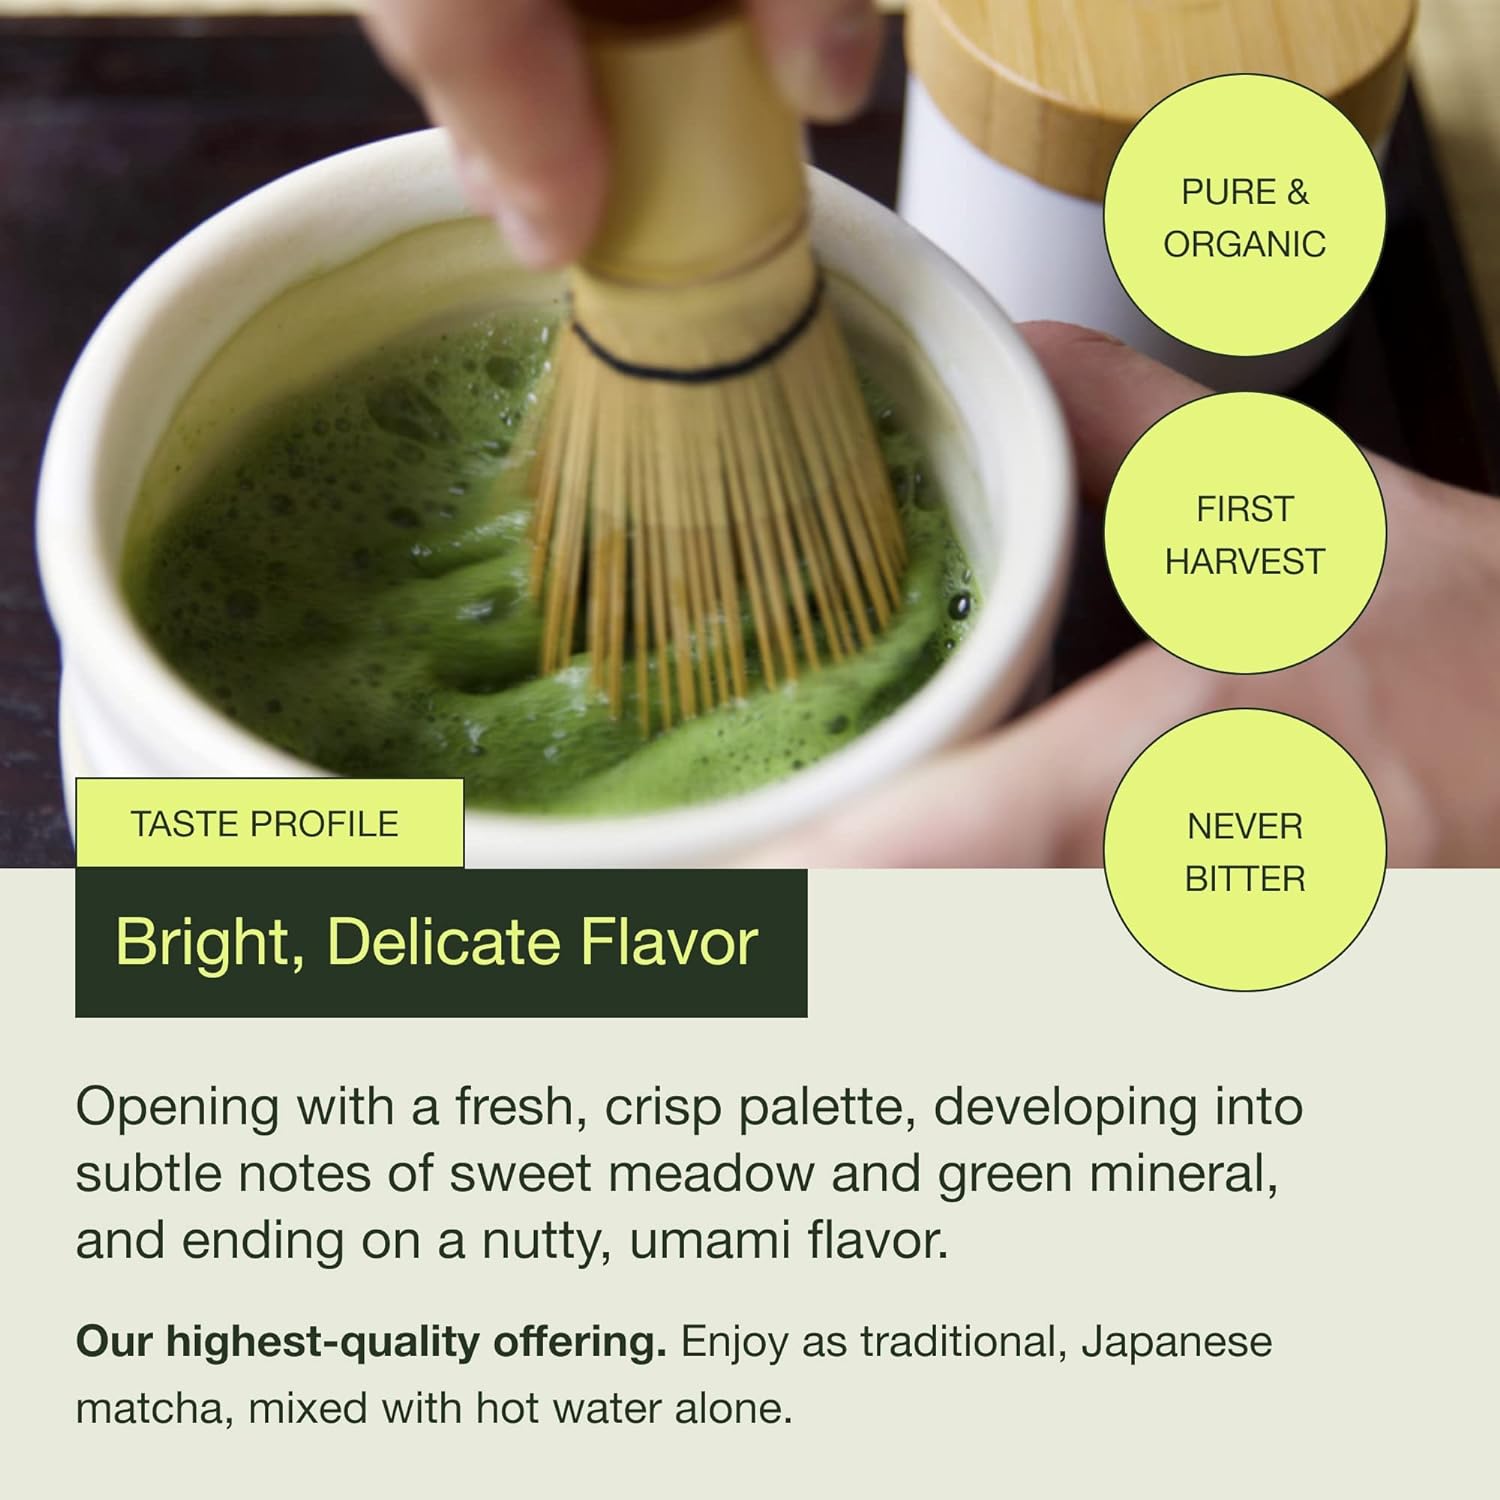 Organic Ceremonial Matcha Green Tea Powder - Encha Matcha